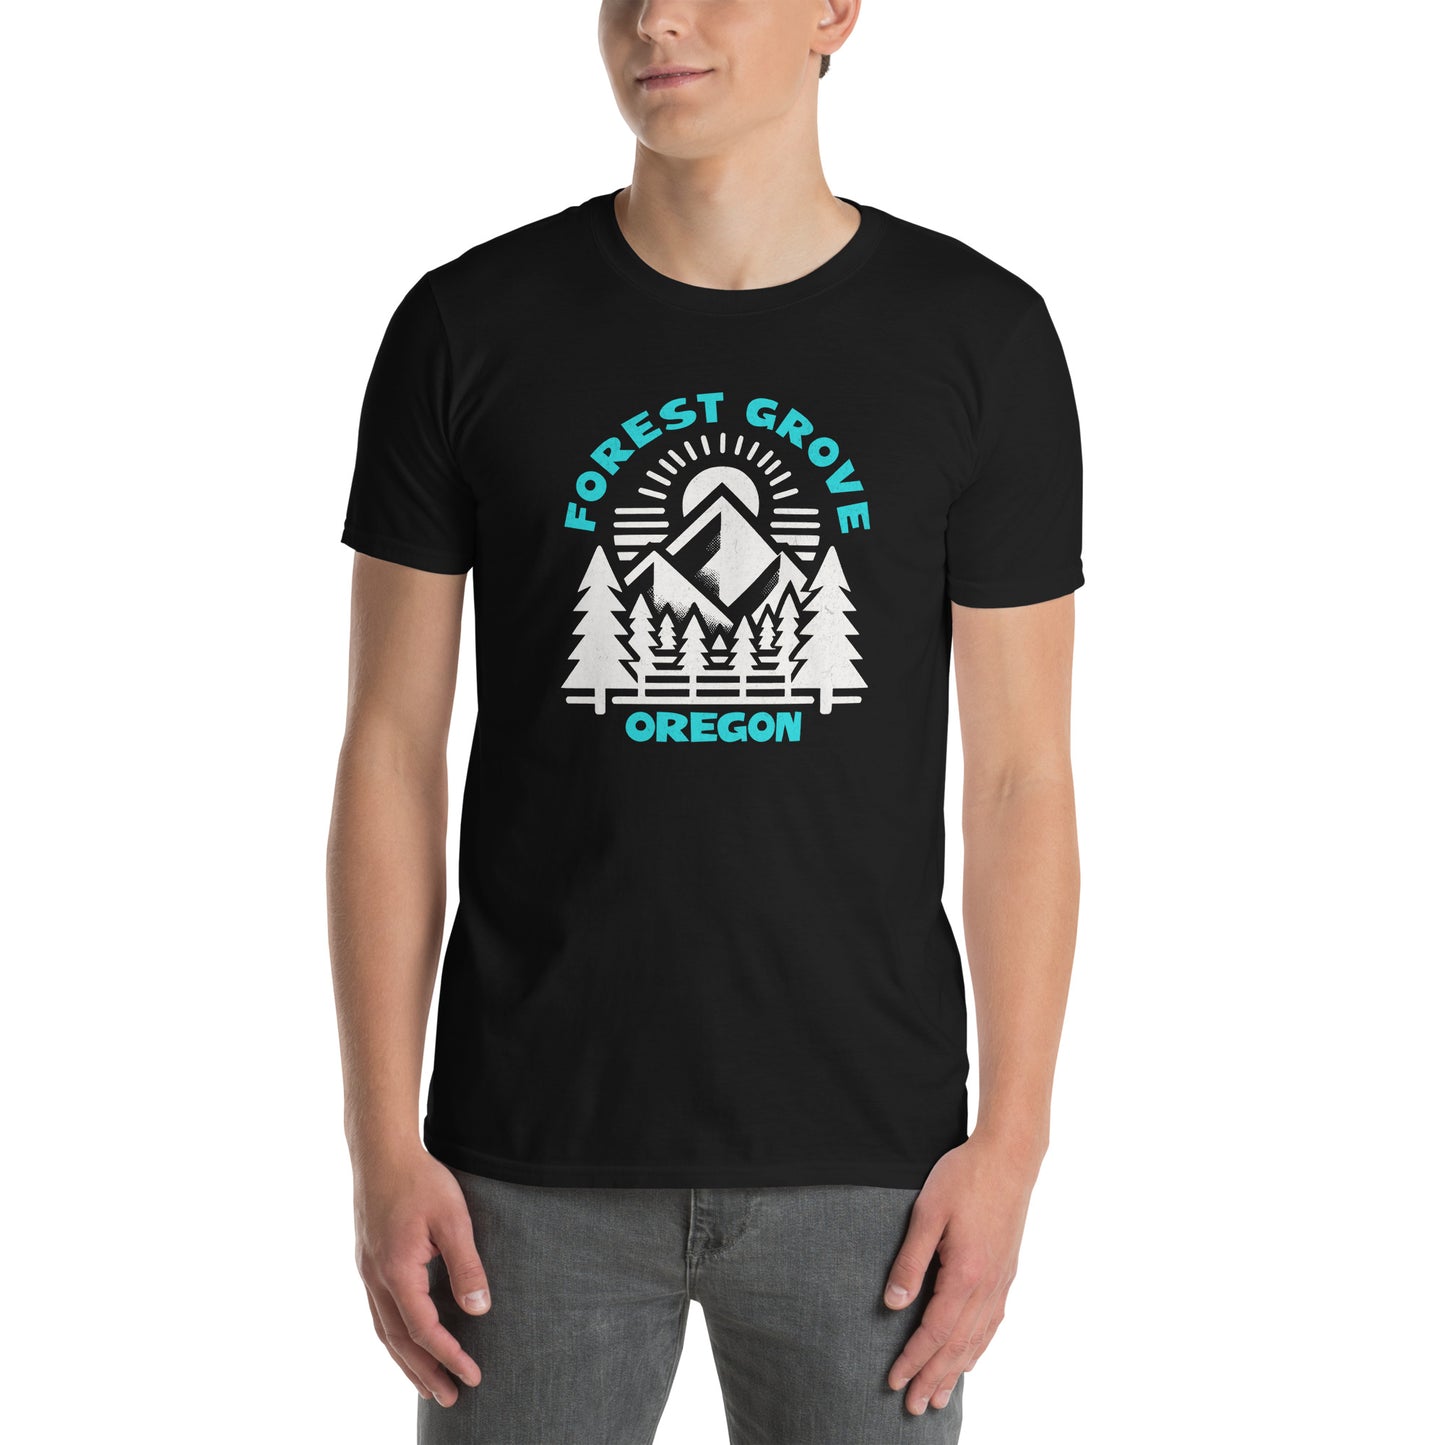 Forest Grove - Featured Cities -Short-Sleeve Unisex T-Shirt